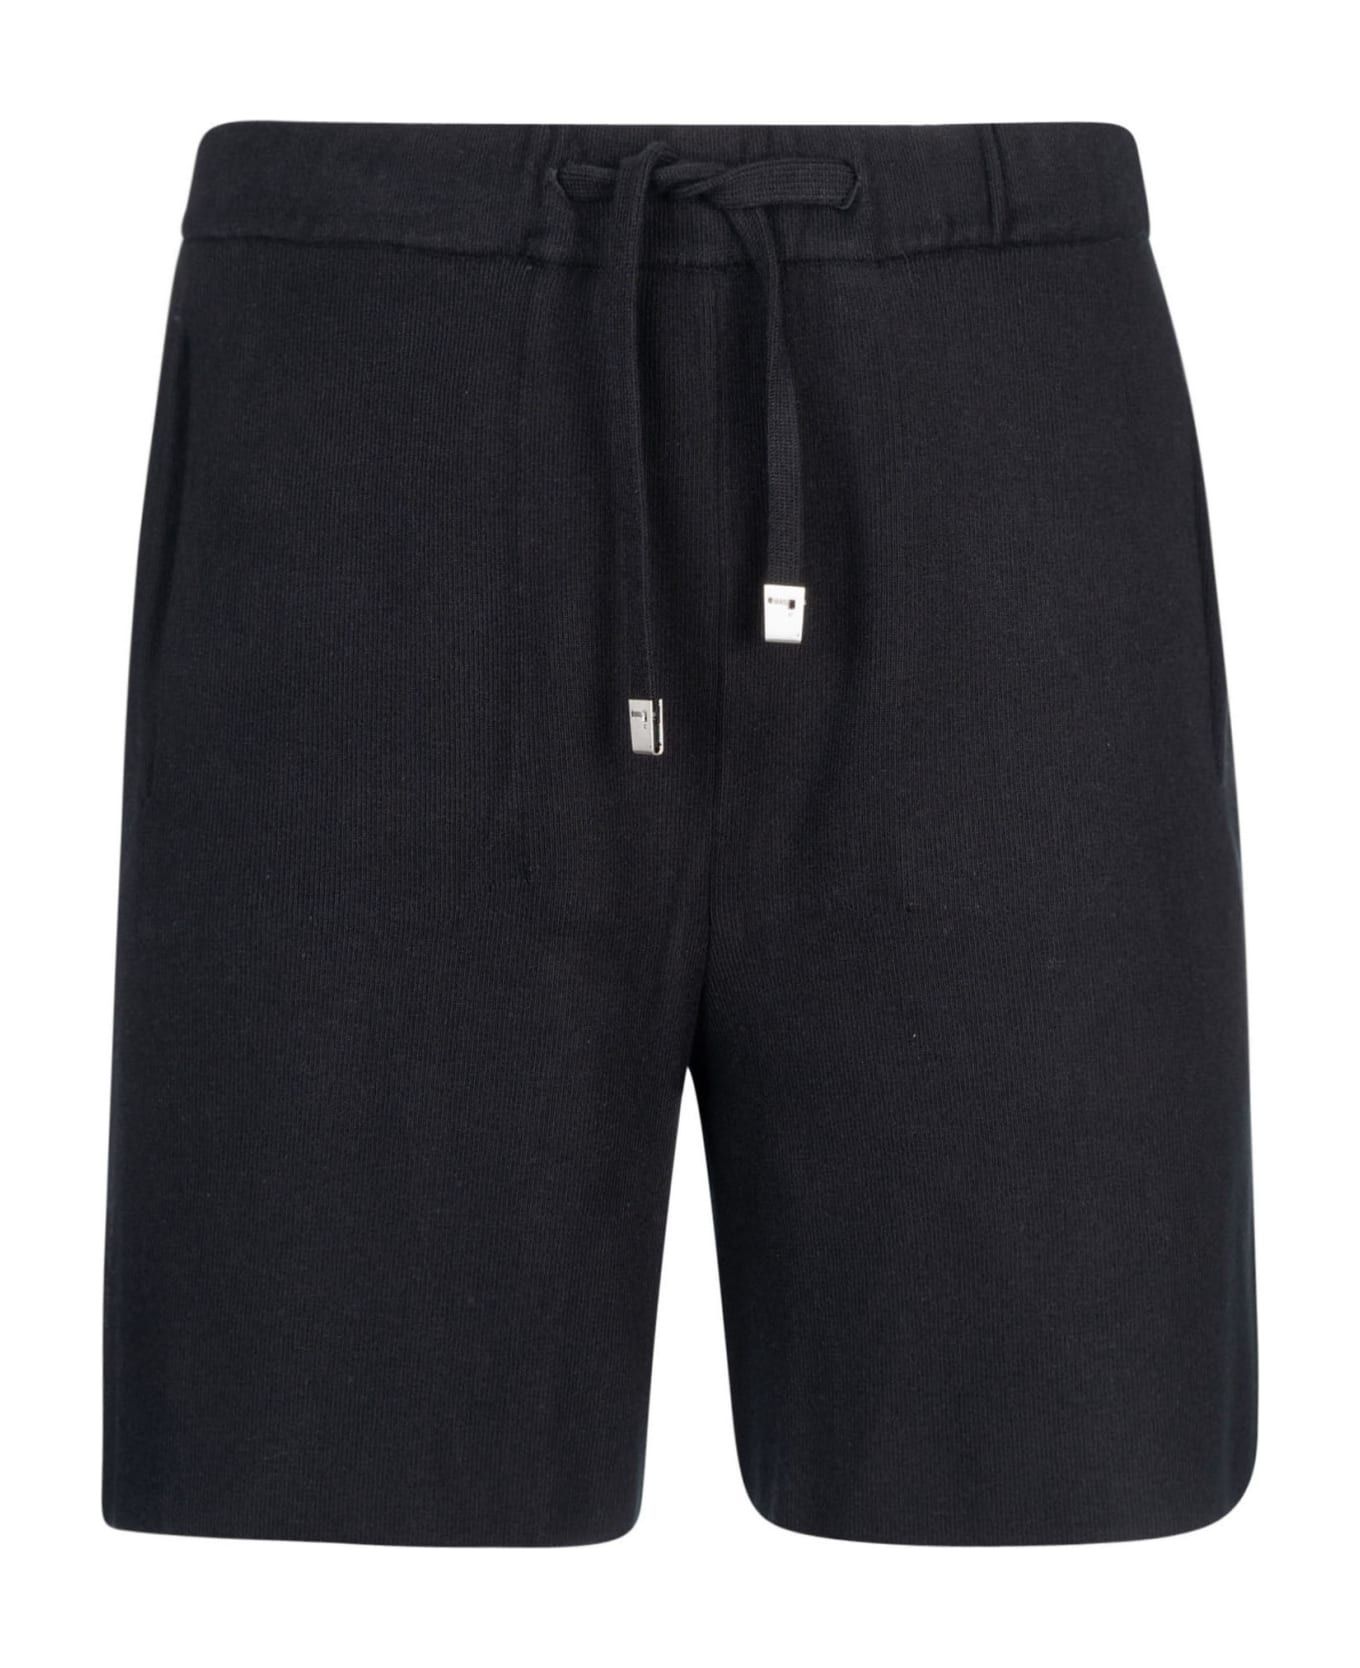 1017 ALYX 9SM Laced Shorts - Black ショートパンツ